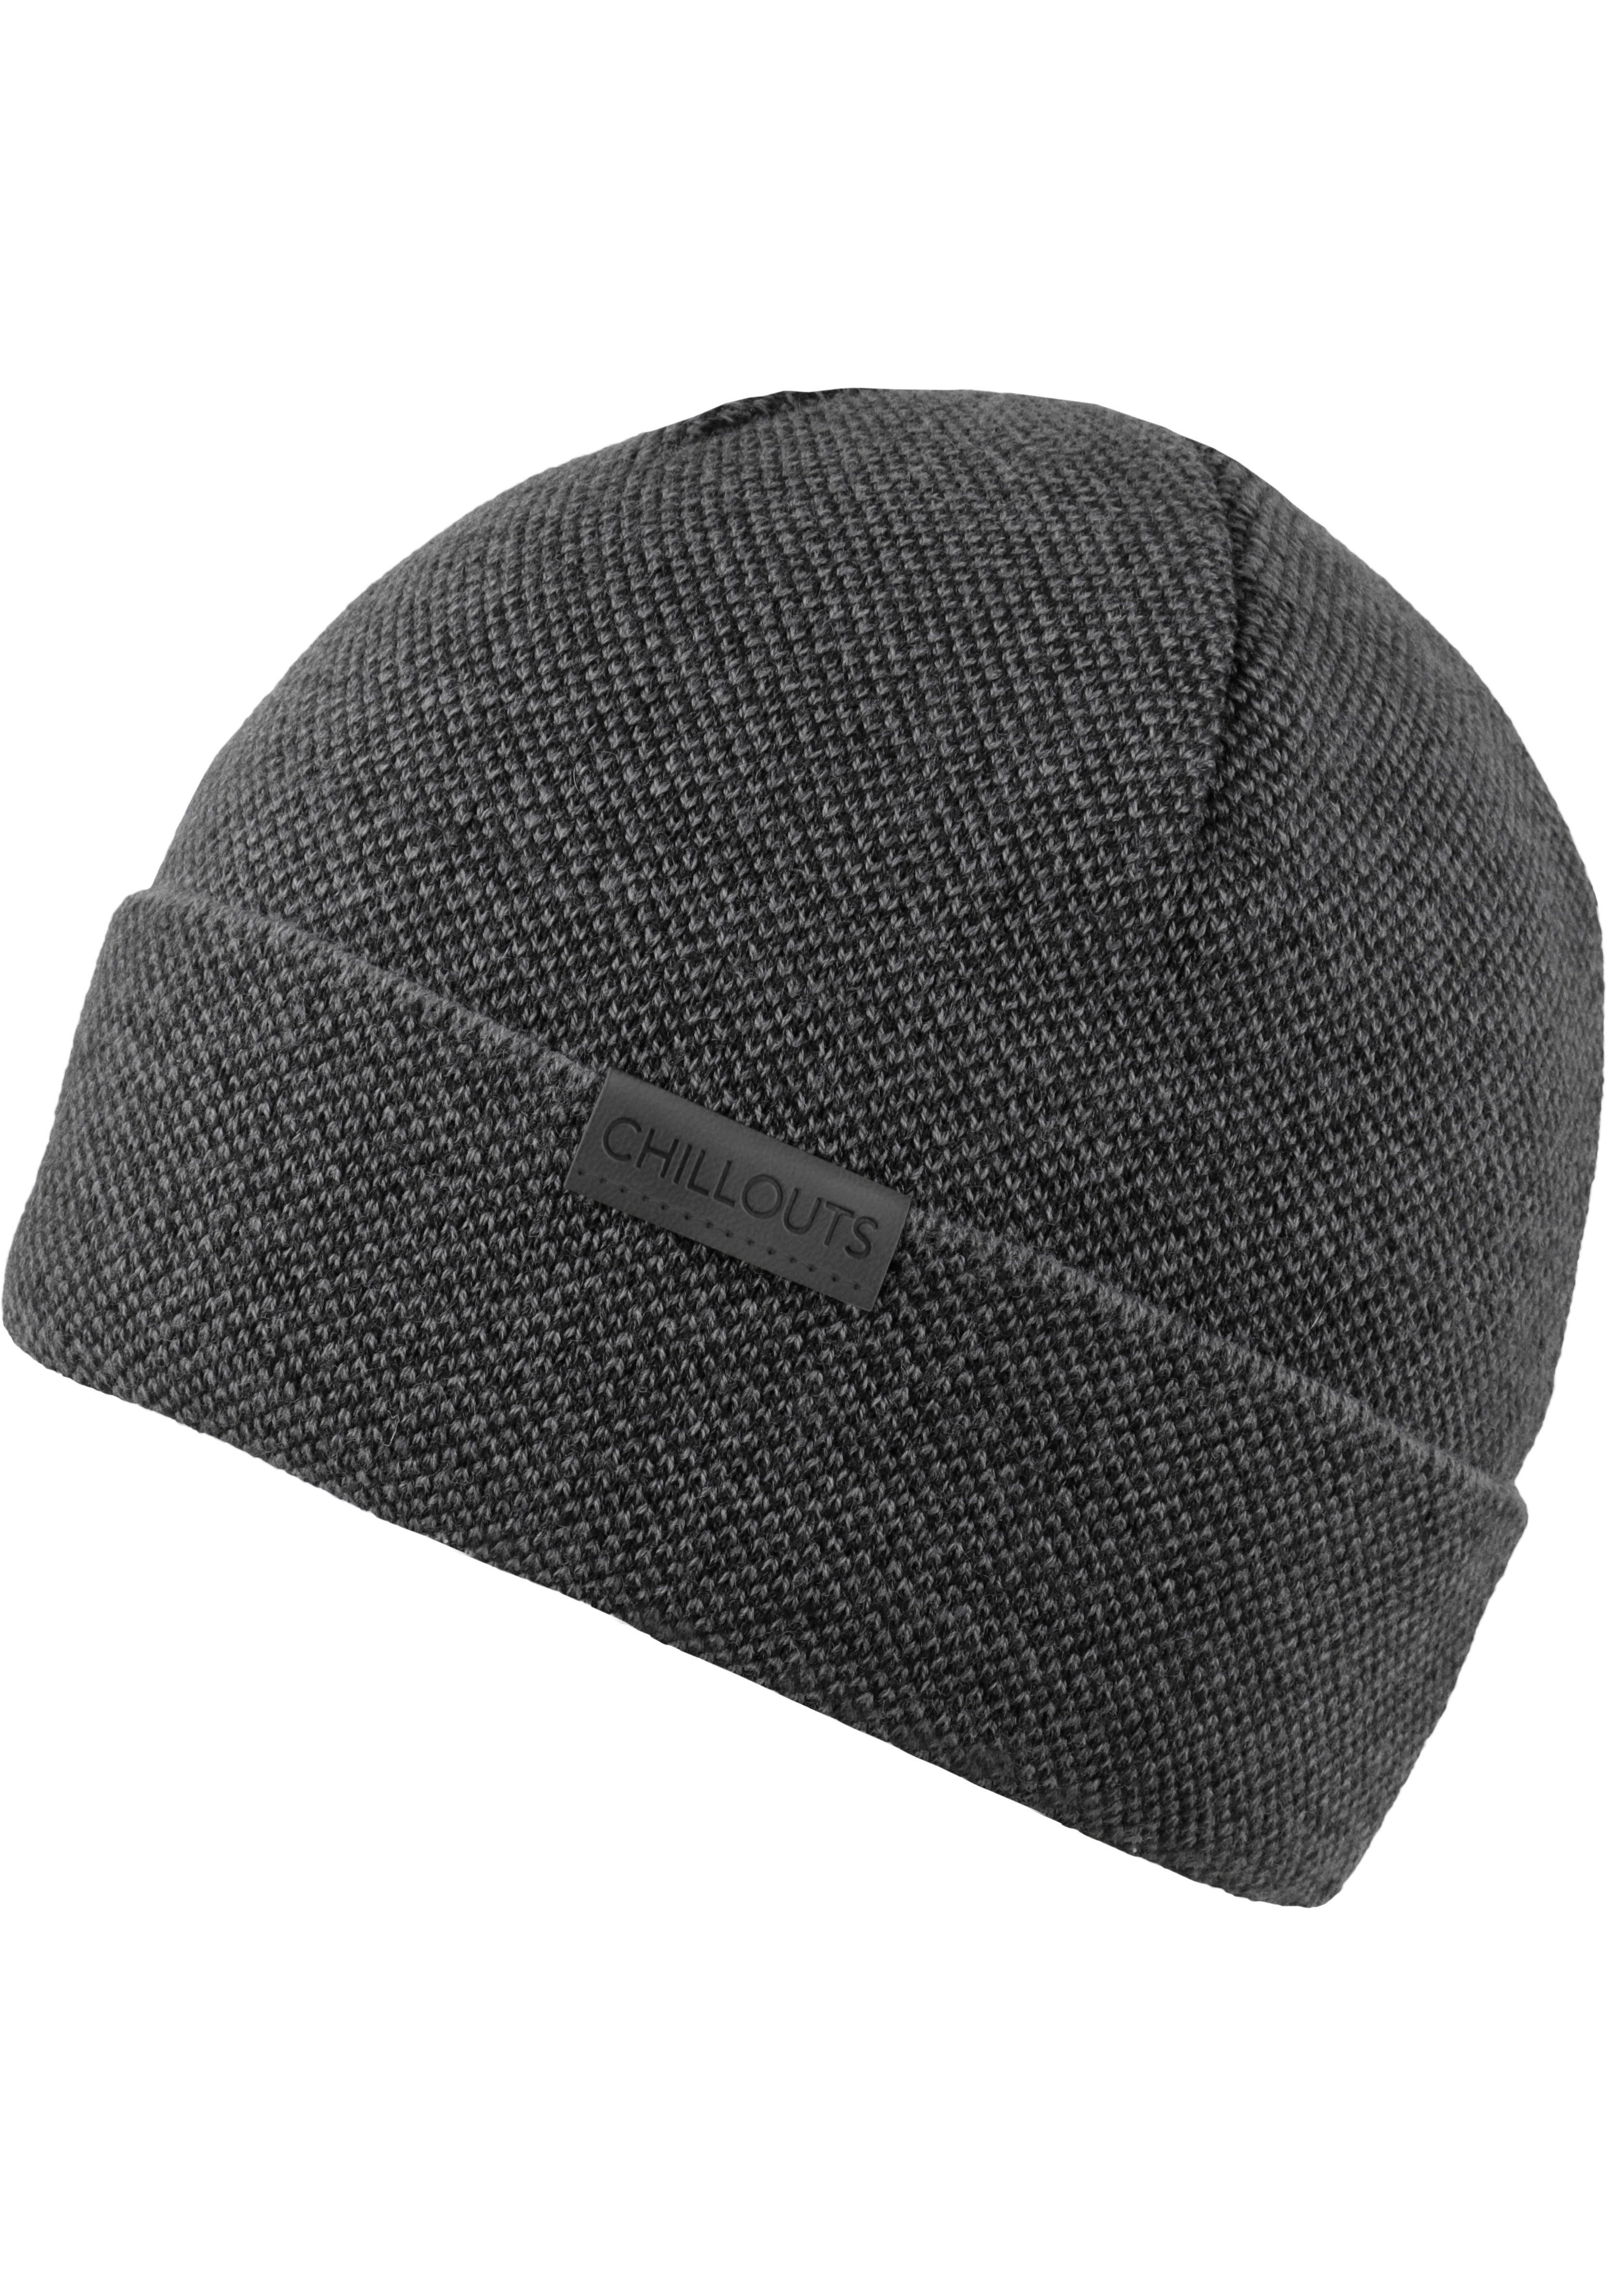 grey dark Kilian chillouts Hat Strickmütze